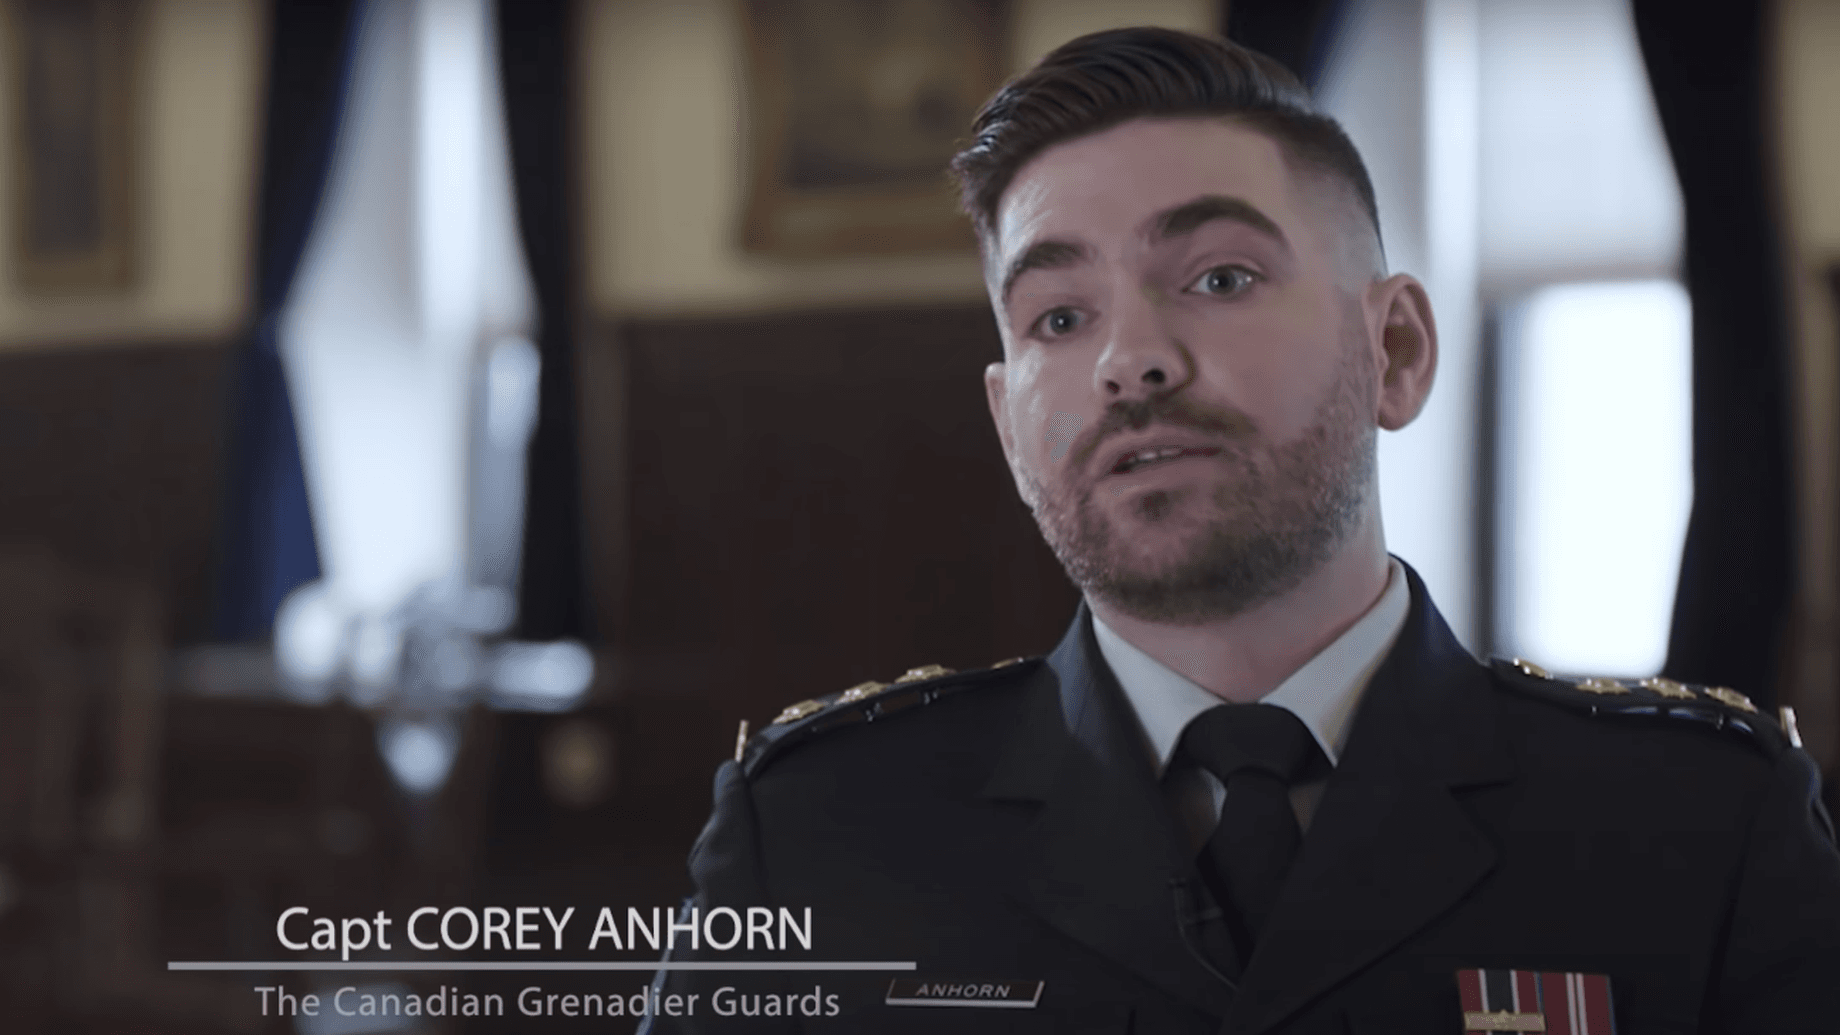 Record of Service: Captain Corey Anhorn